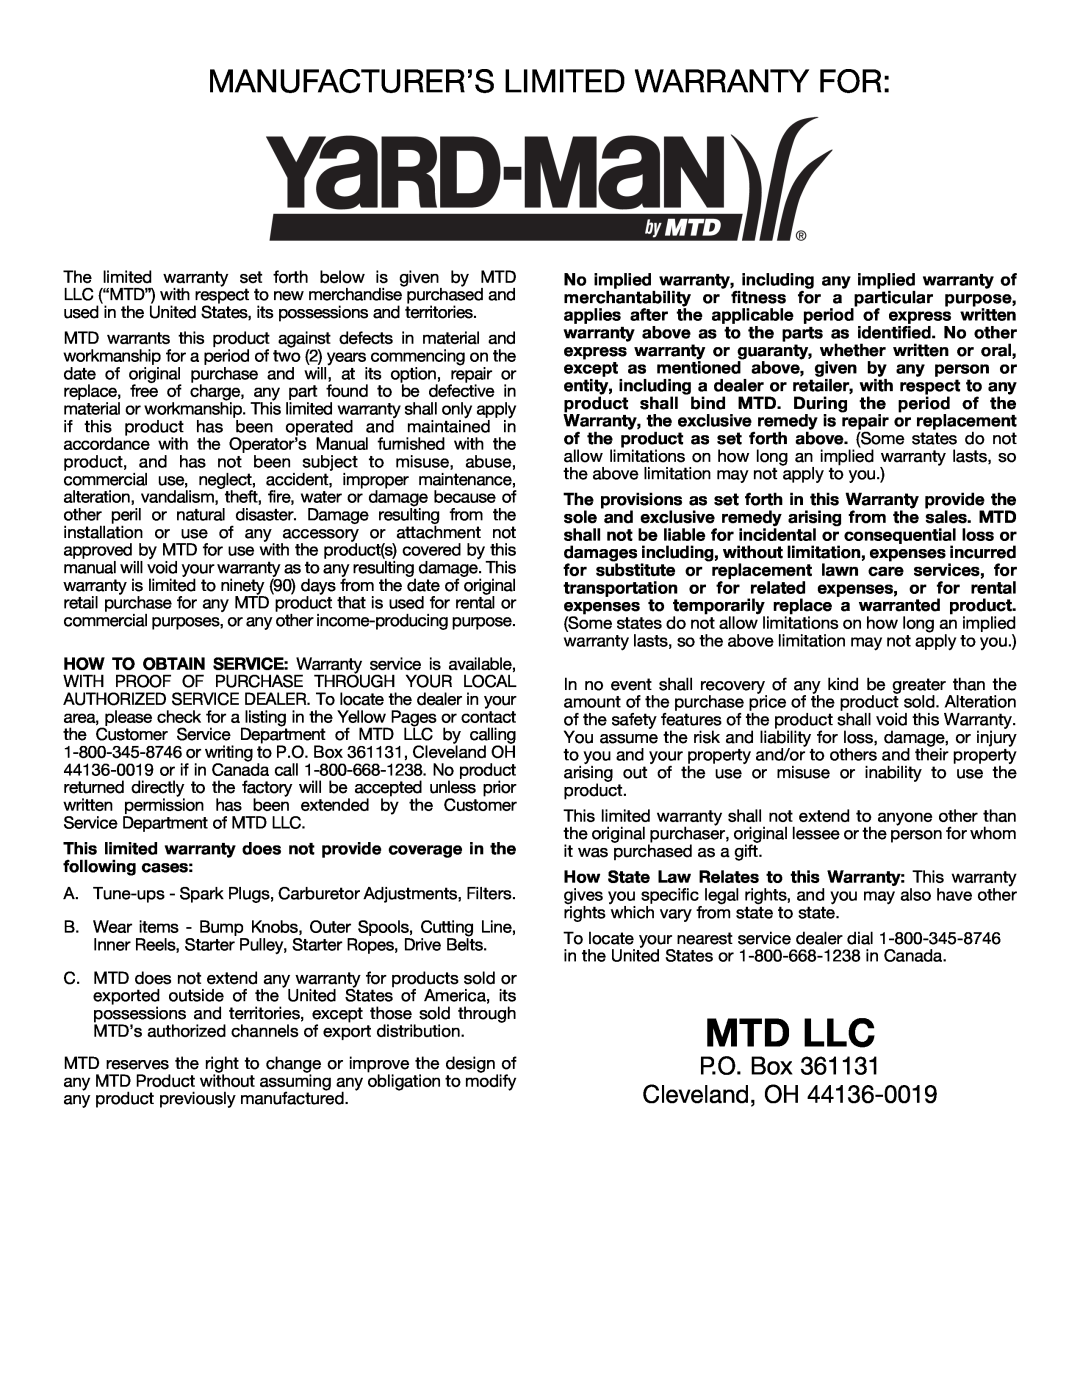 Bolens YM320BV manual Mtd Llc, Manufacturer’S Limited Warranty For, P.O. Box Cleveland, OH 